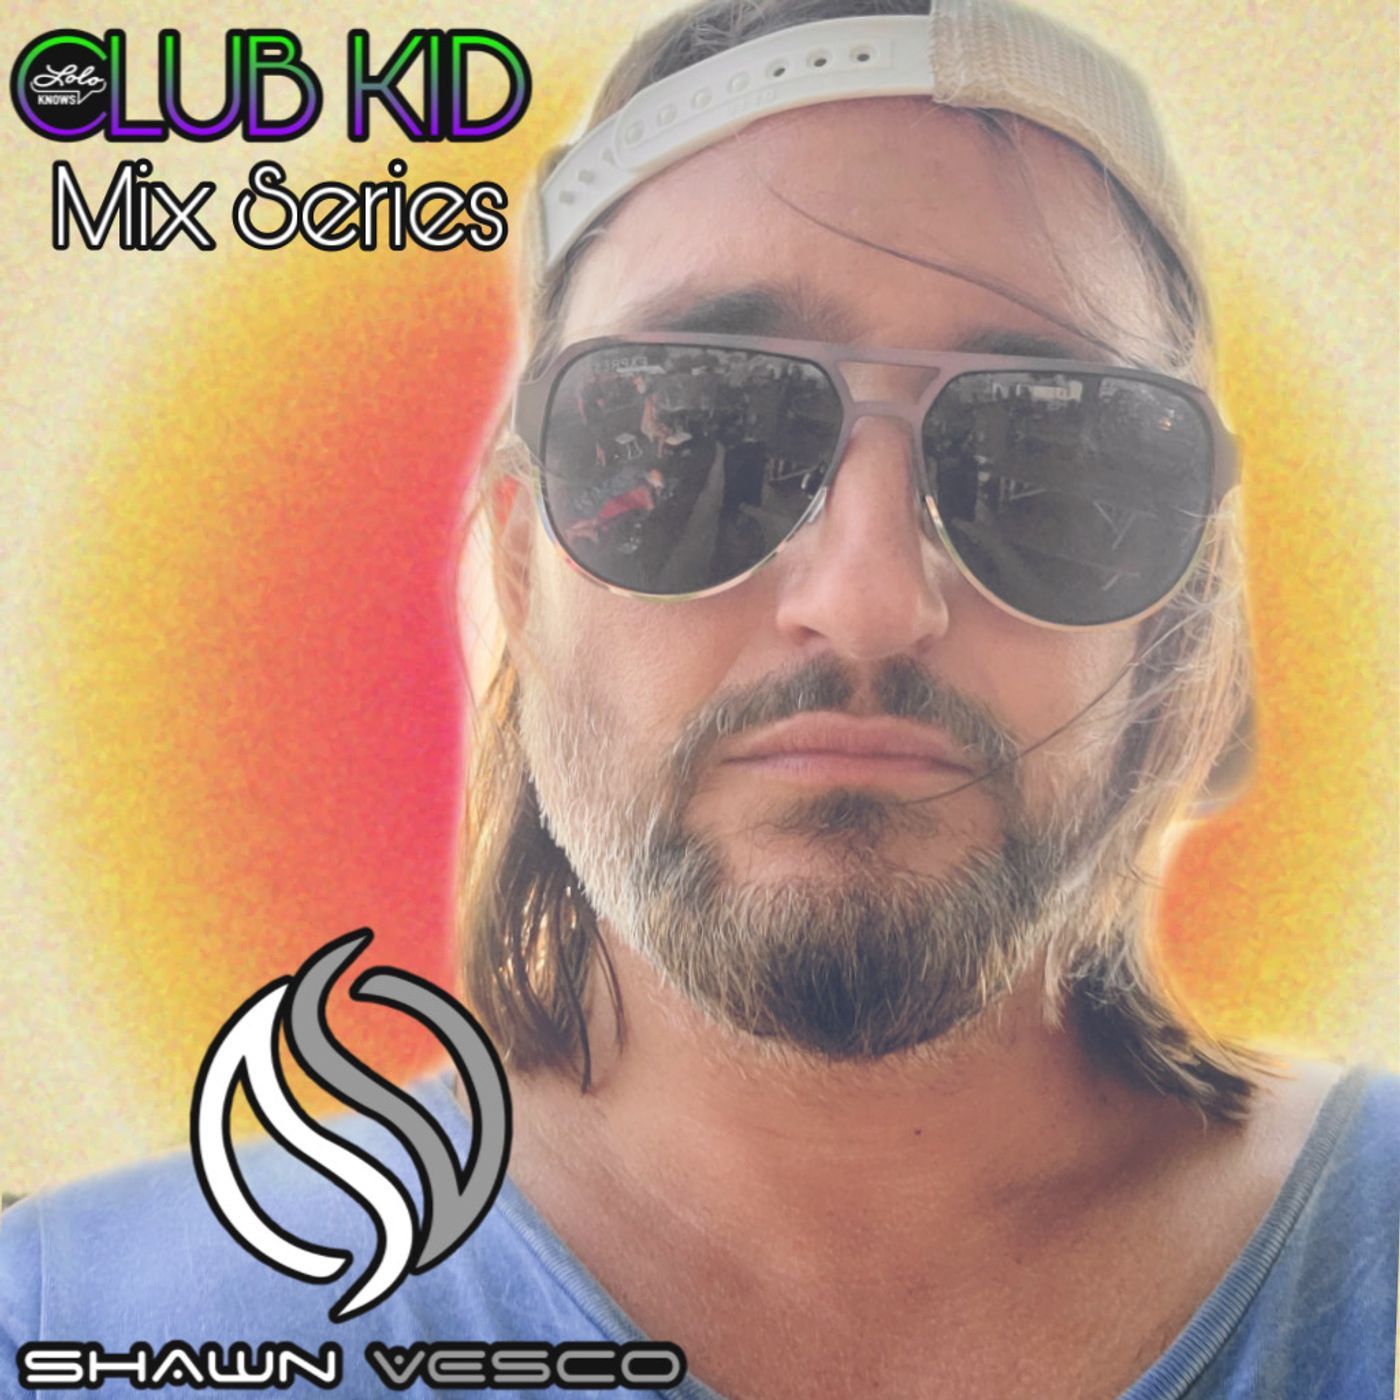 LOLO Knows Club Kid Mix Series...  Shawn Vesco, Cleveland